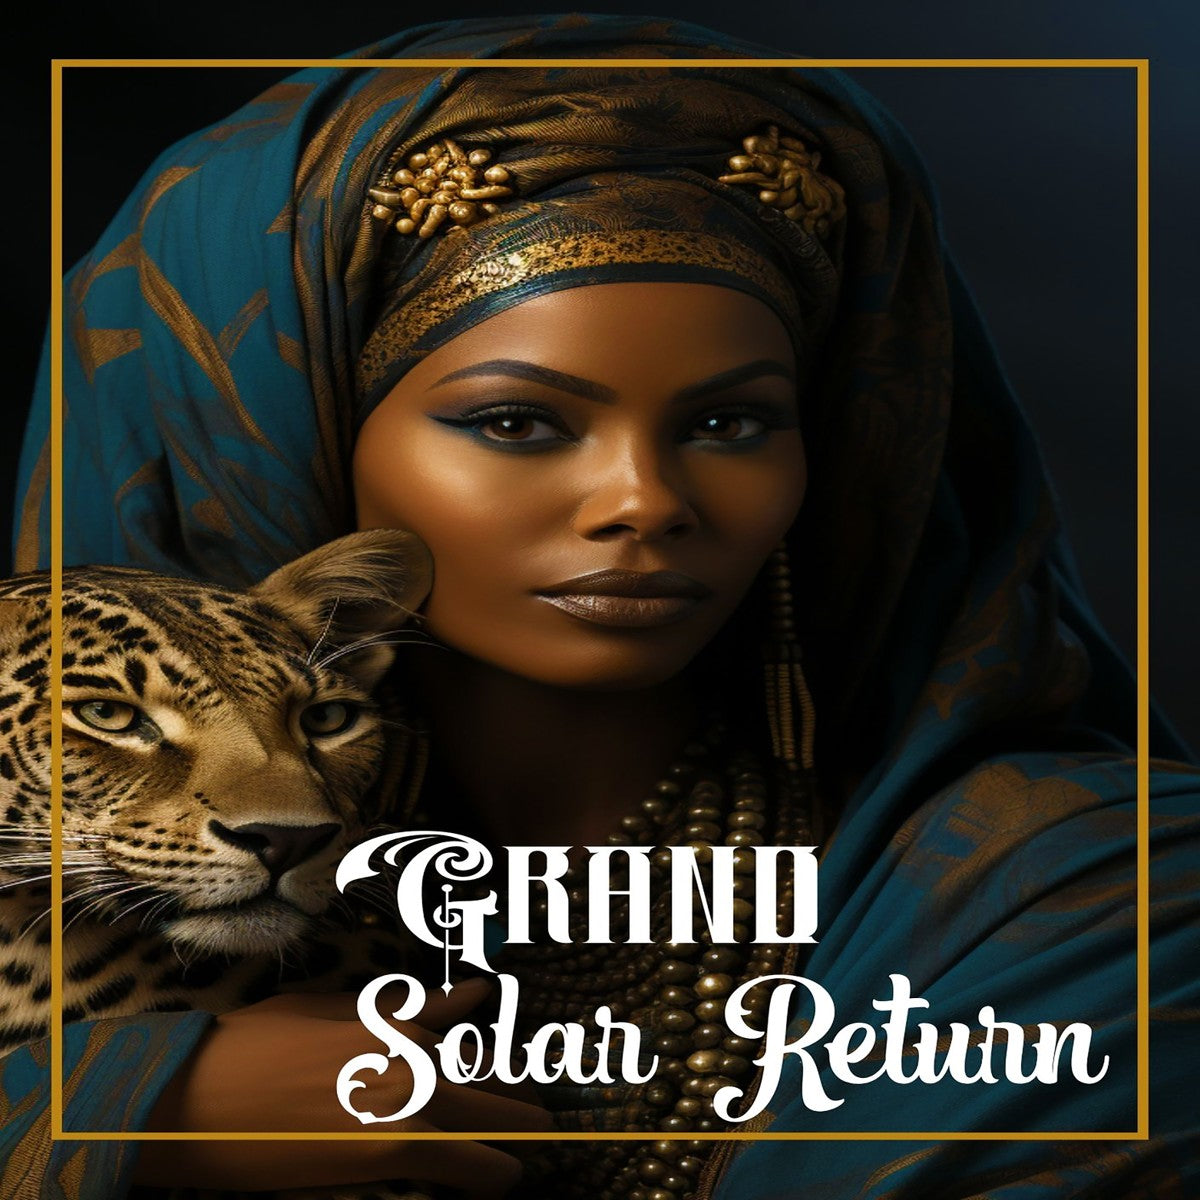 Grand Solar Return Leopard Luxe Lady Glamorous Empress